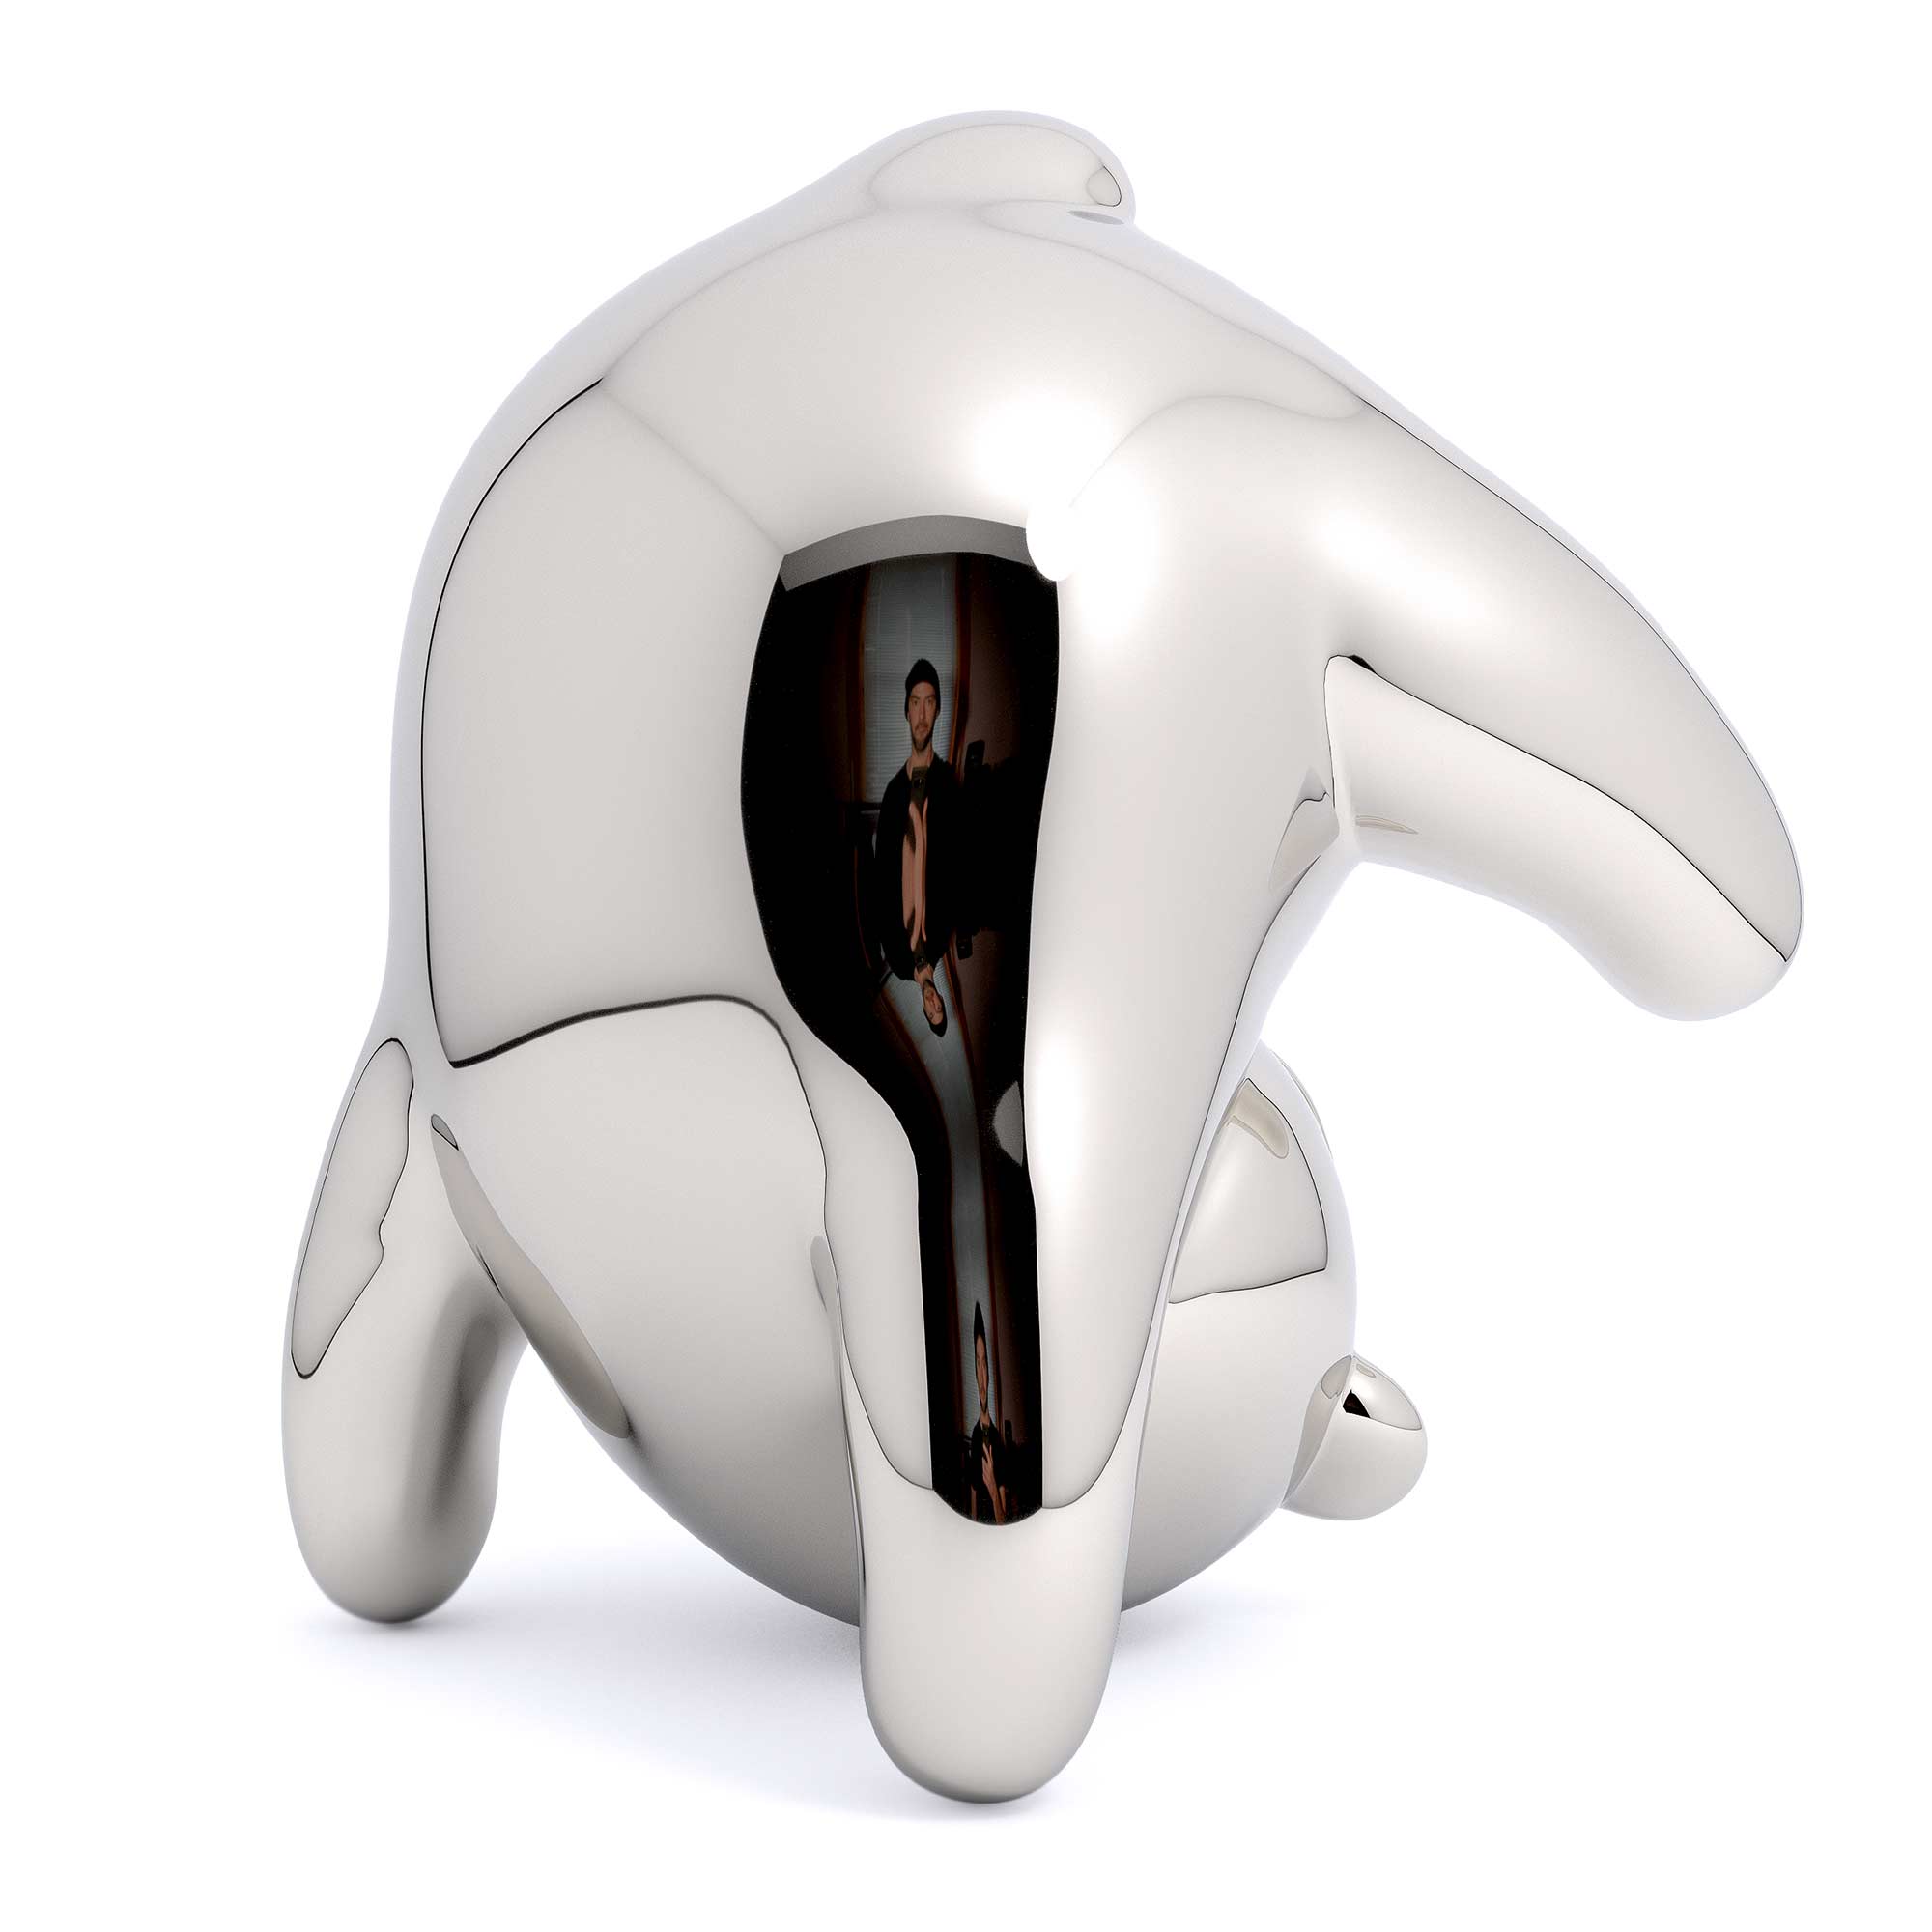 Panda-monium, Mirror Polished Stainless Steel Sculpture, by artist Ferdi B Dick, back 45 gegree